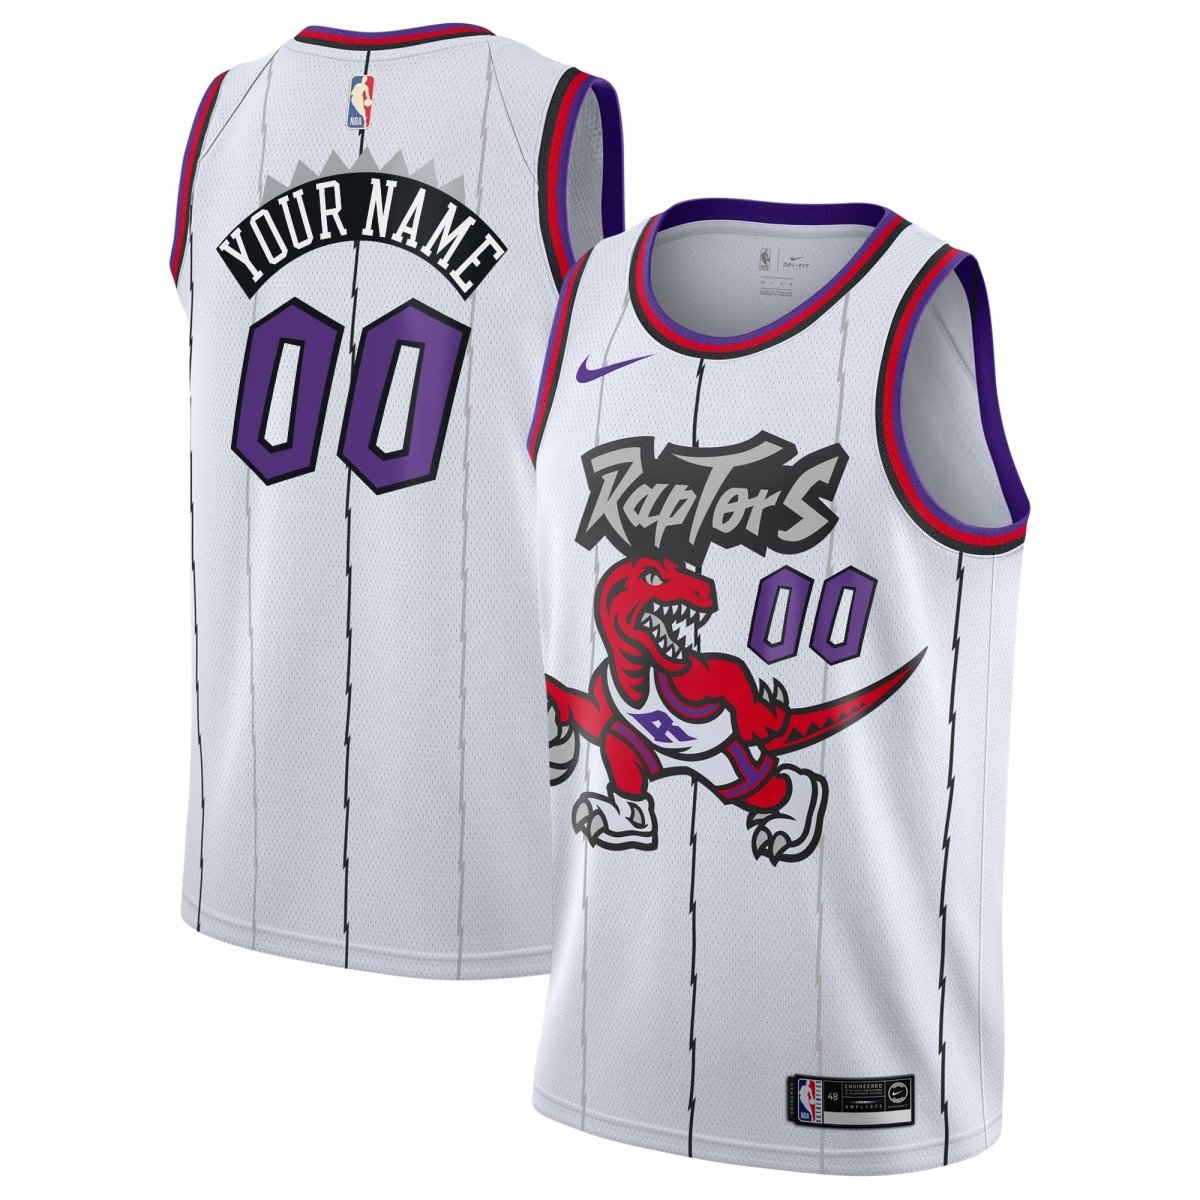 Toronto Raptors Home Uniform  Jersey design, Basketball uniforms